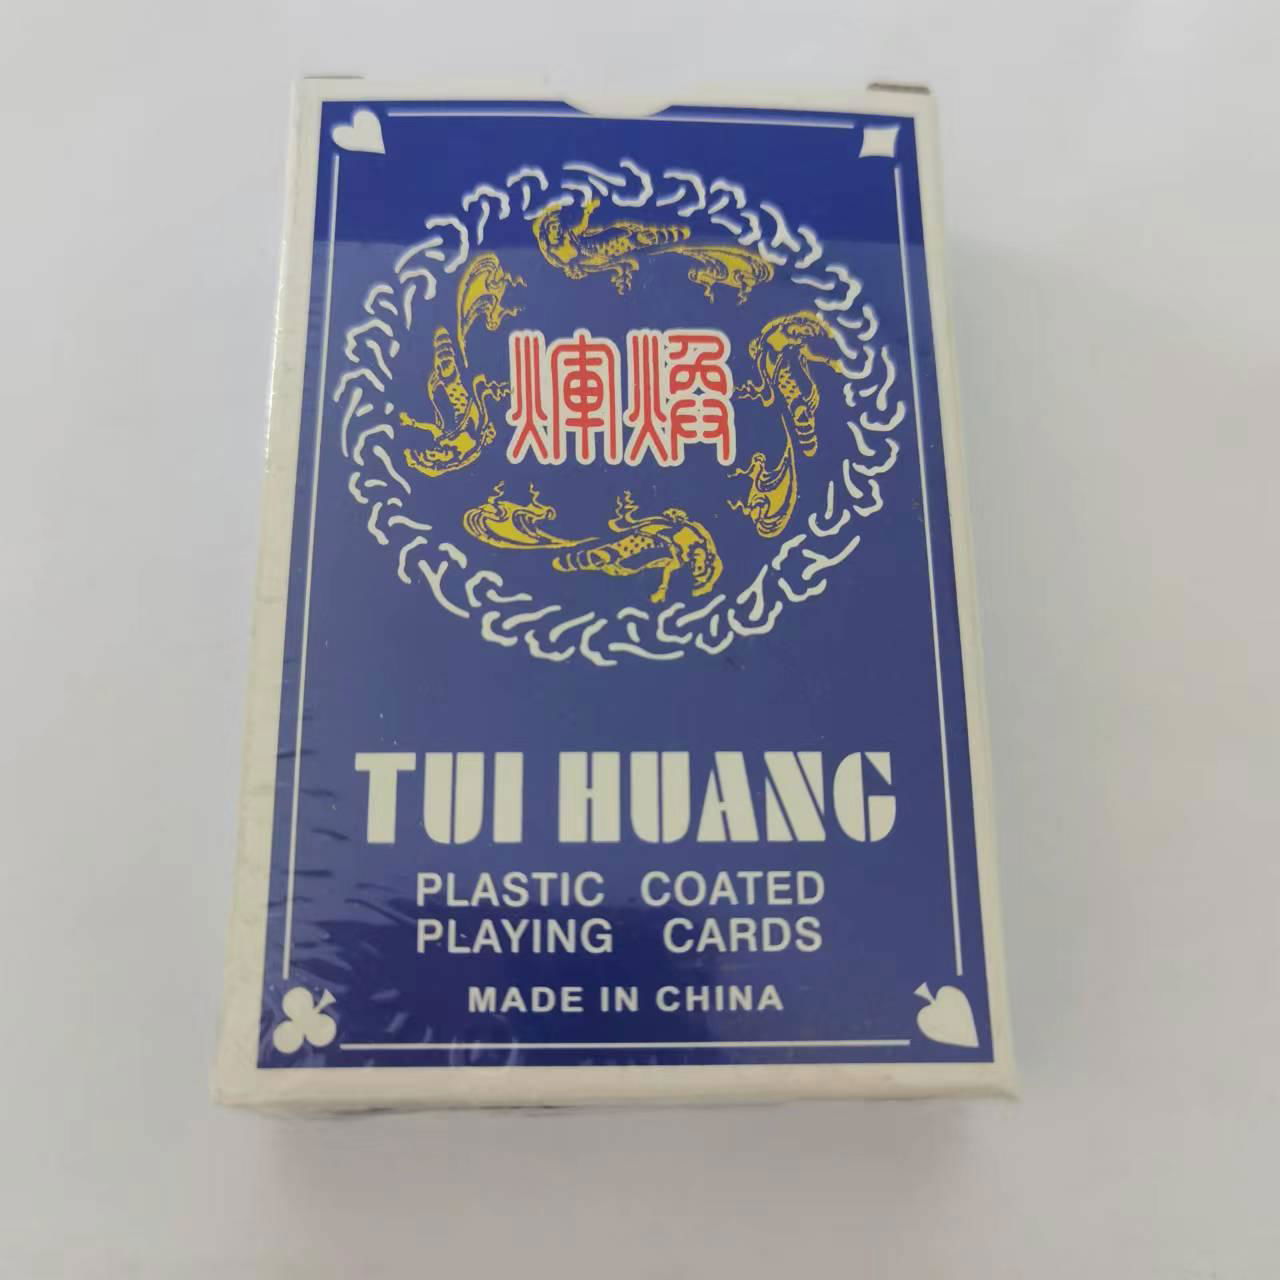 737 tui huang playing cards